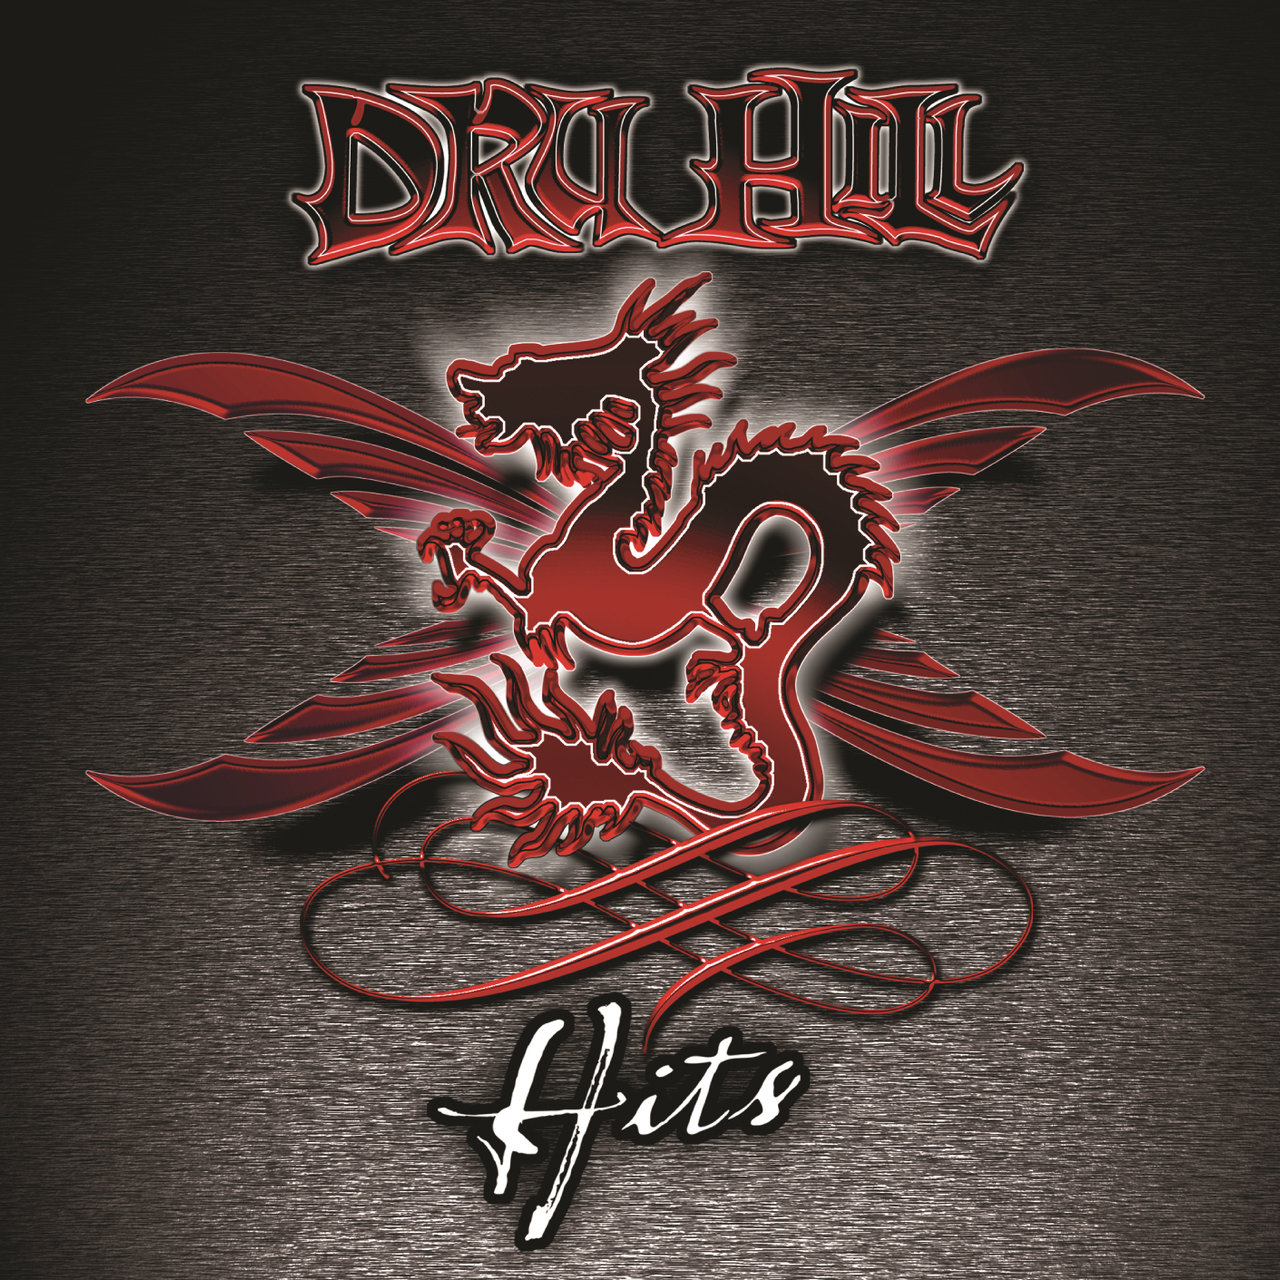 dru hill greatest hits rar - download free apps